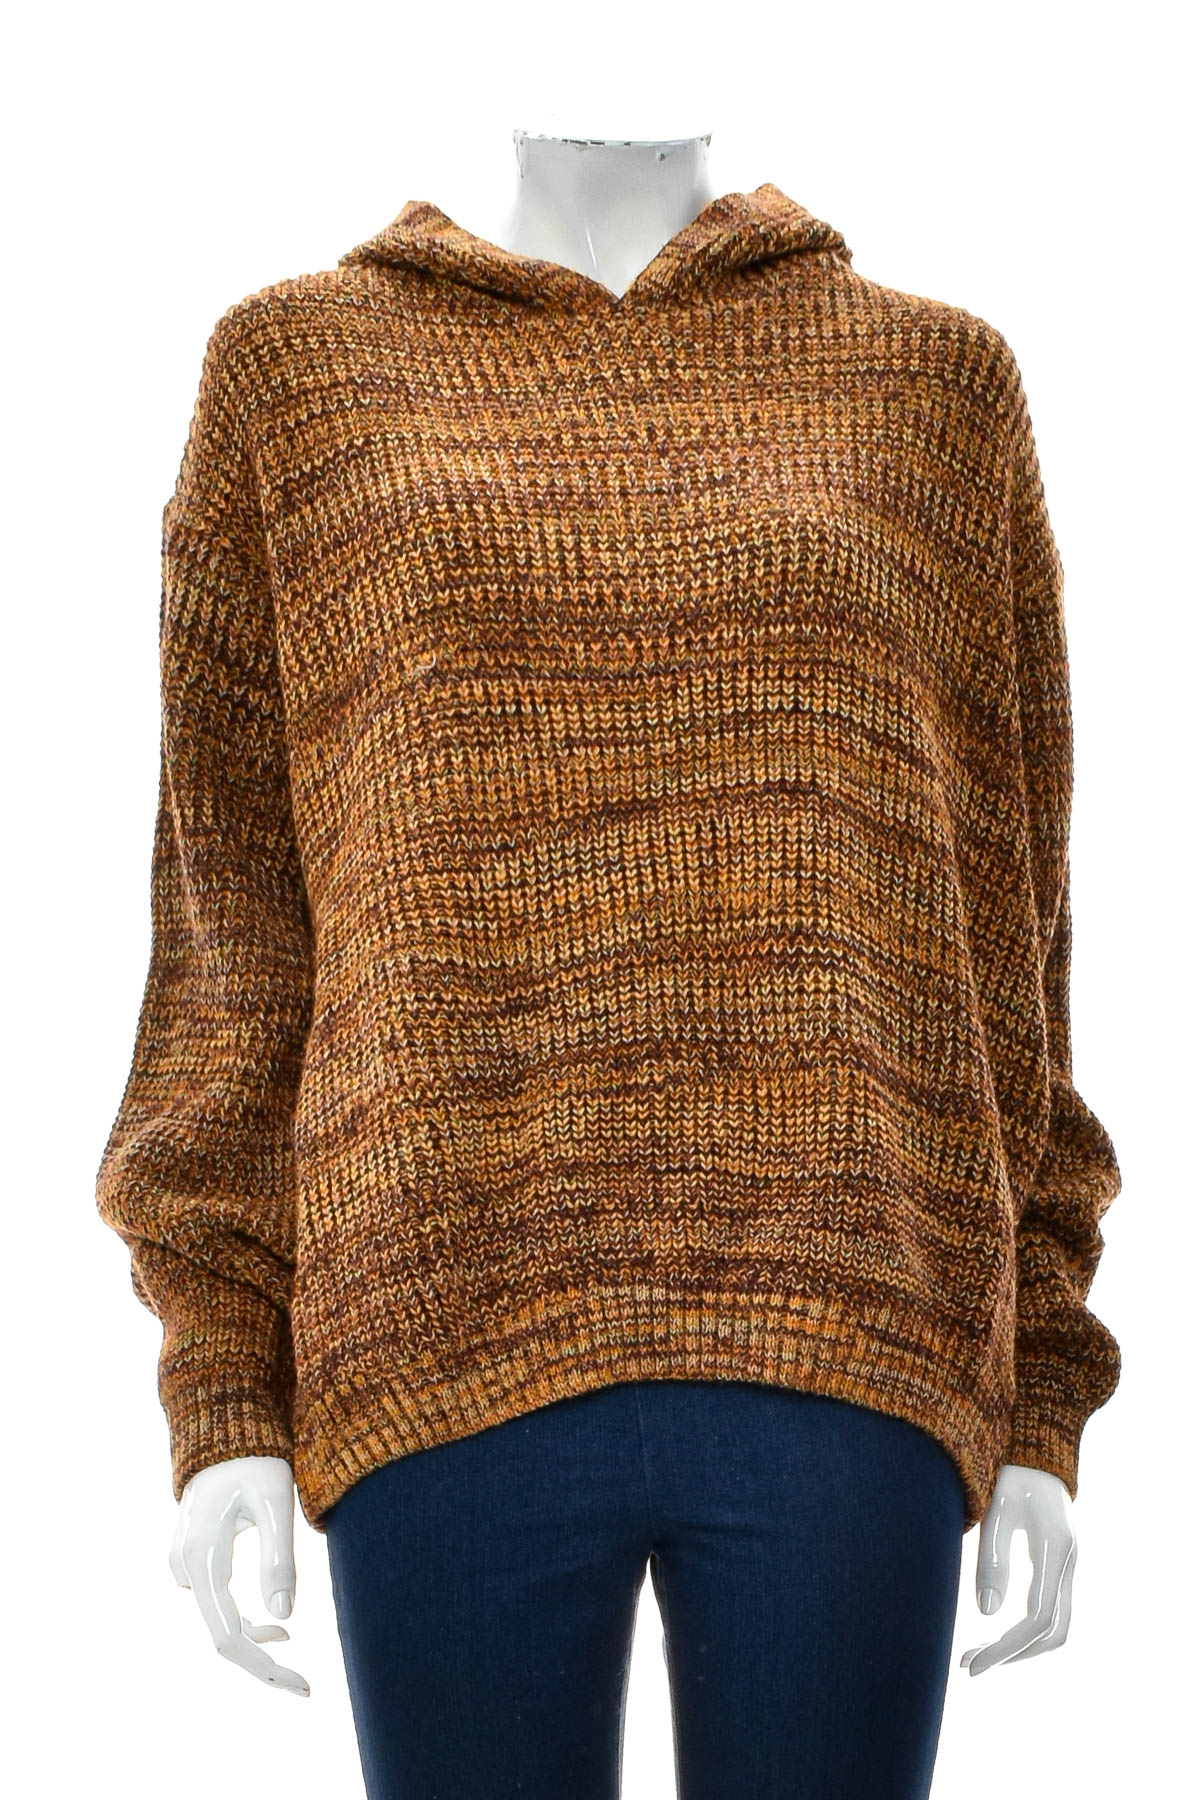 Women's sweater - Asos - 0